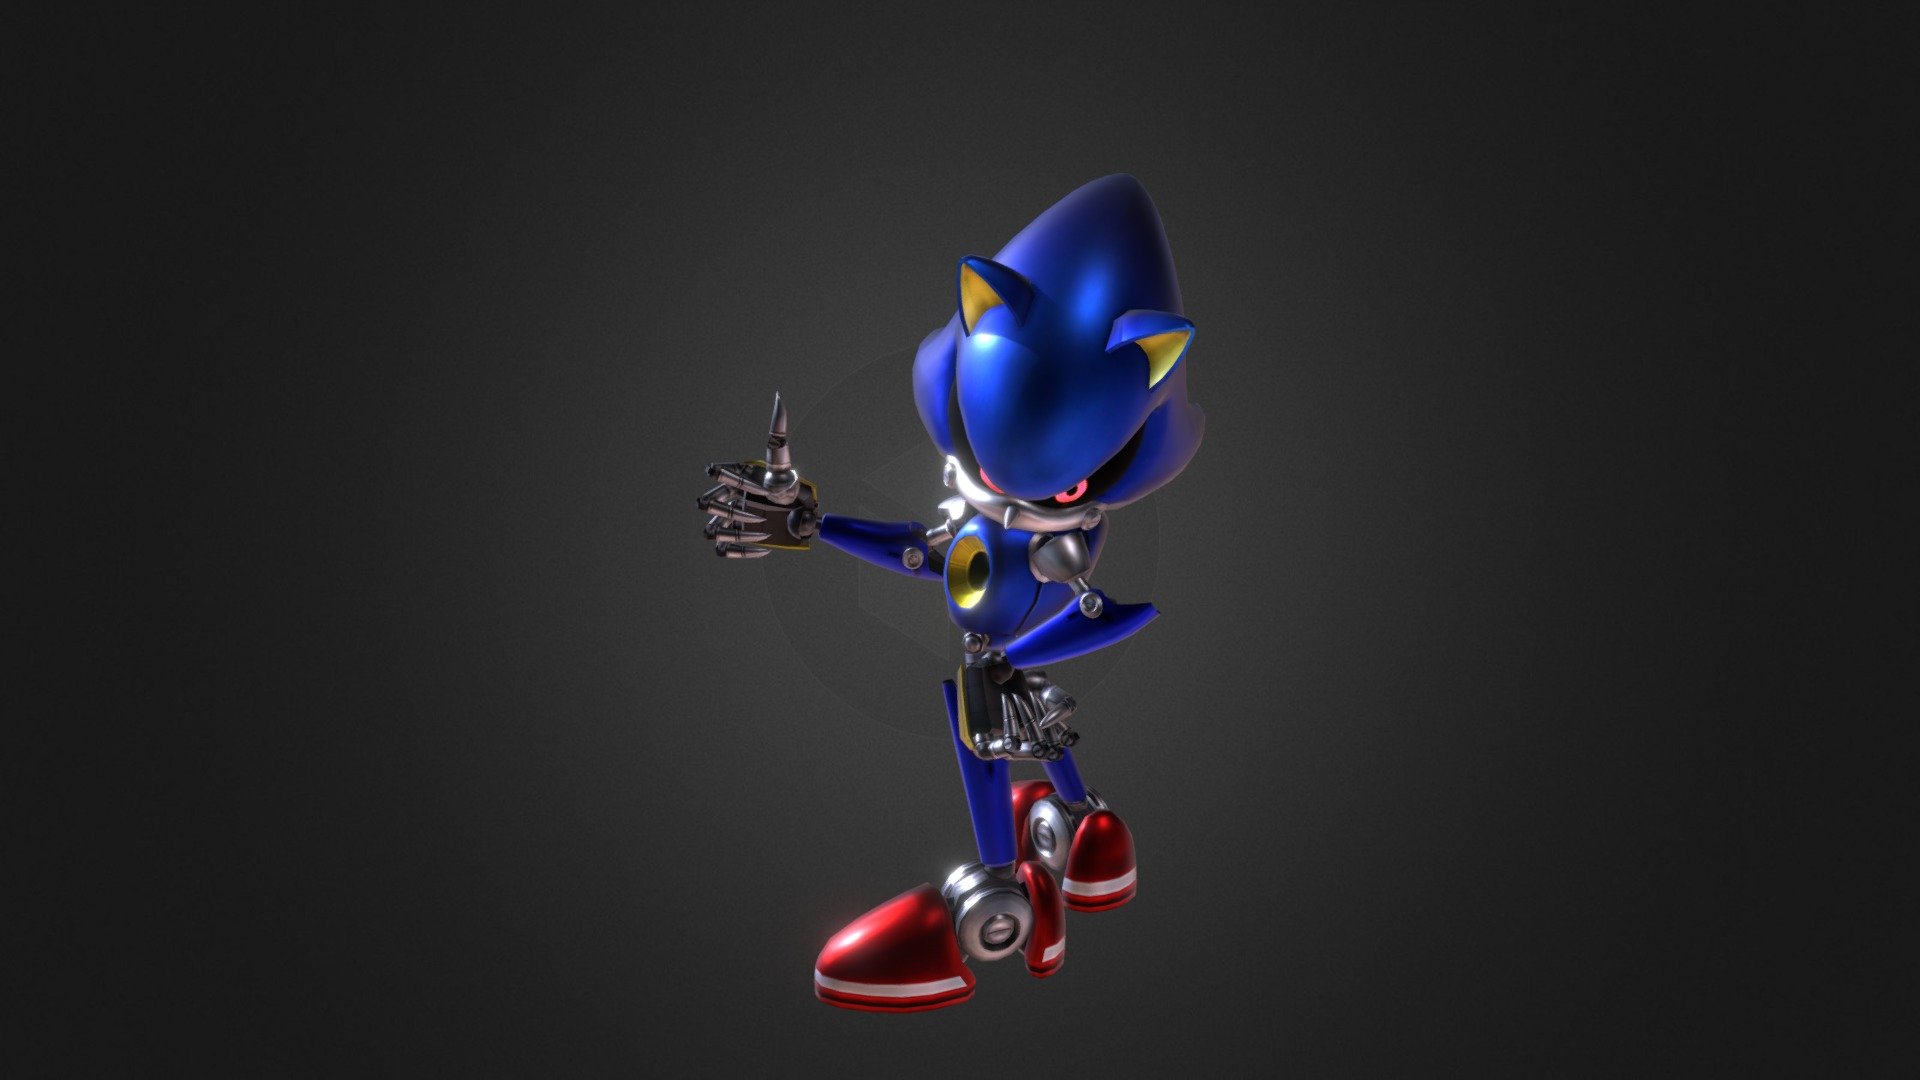 Metal Sonic 3D Render